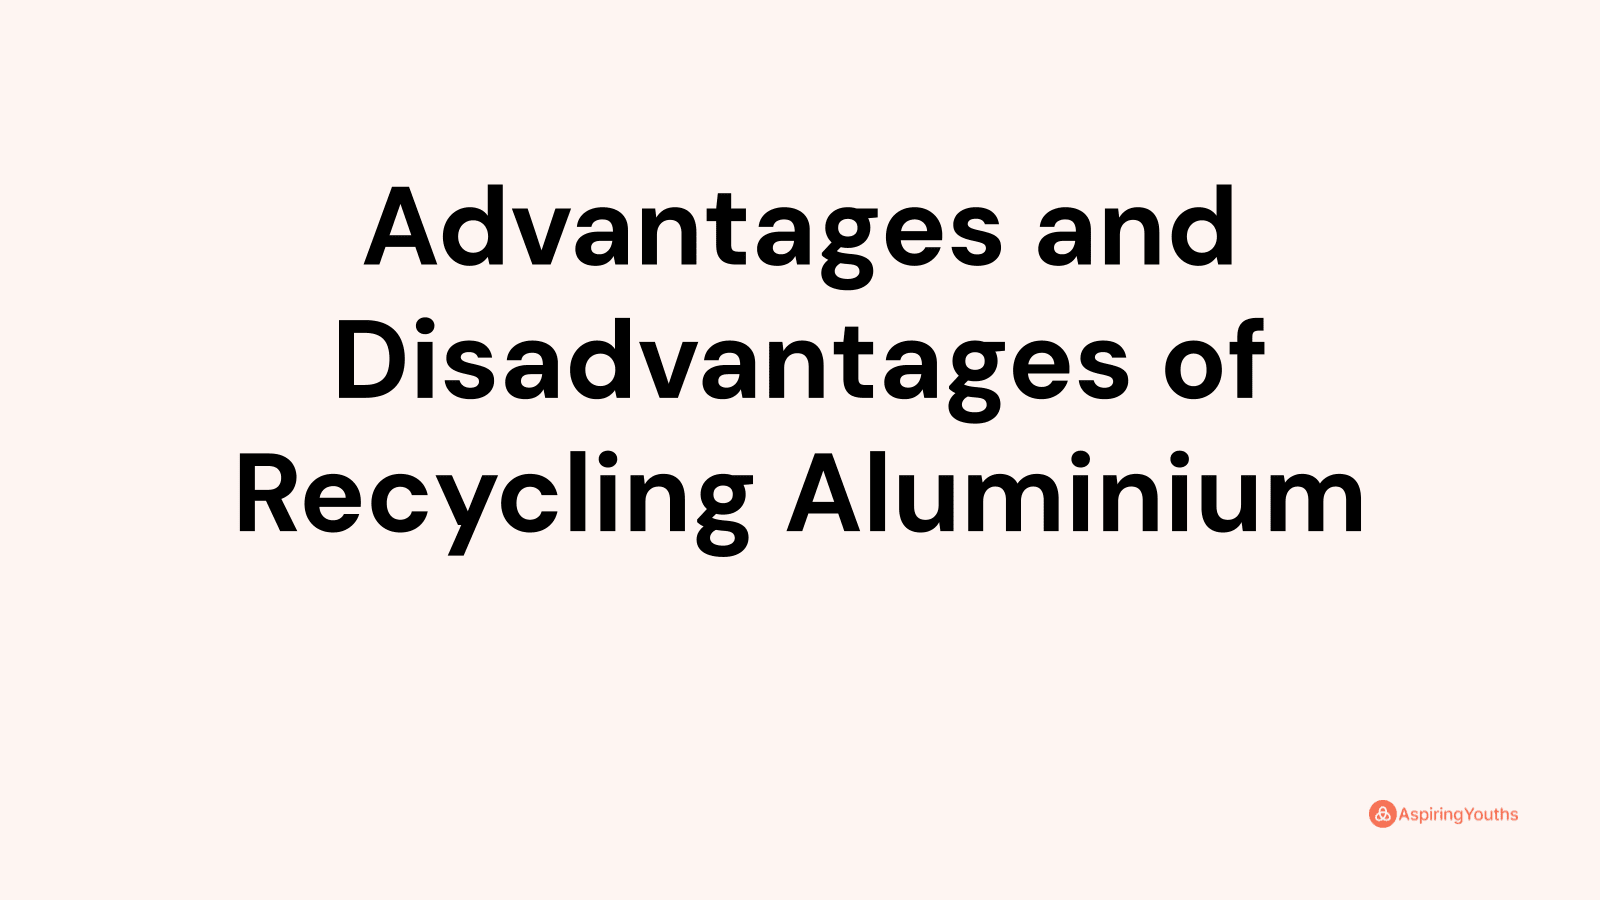 Advantages and disadvantages of Recycling Aluminium